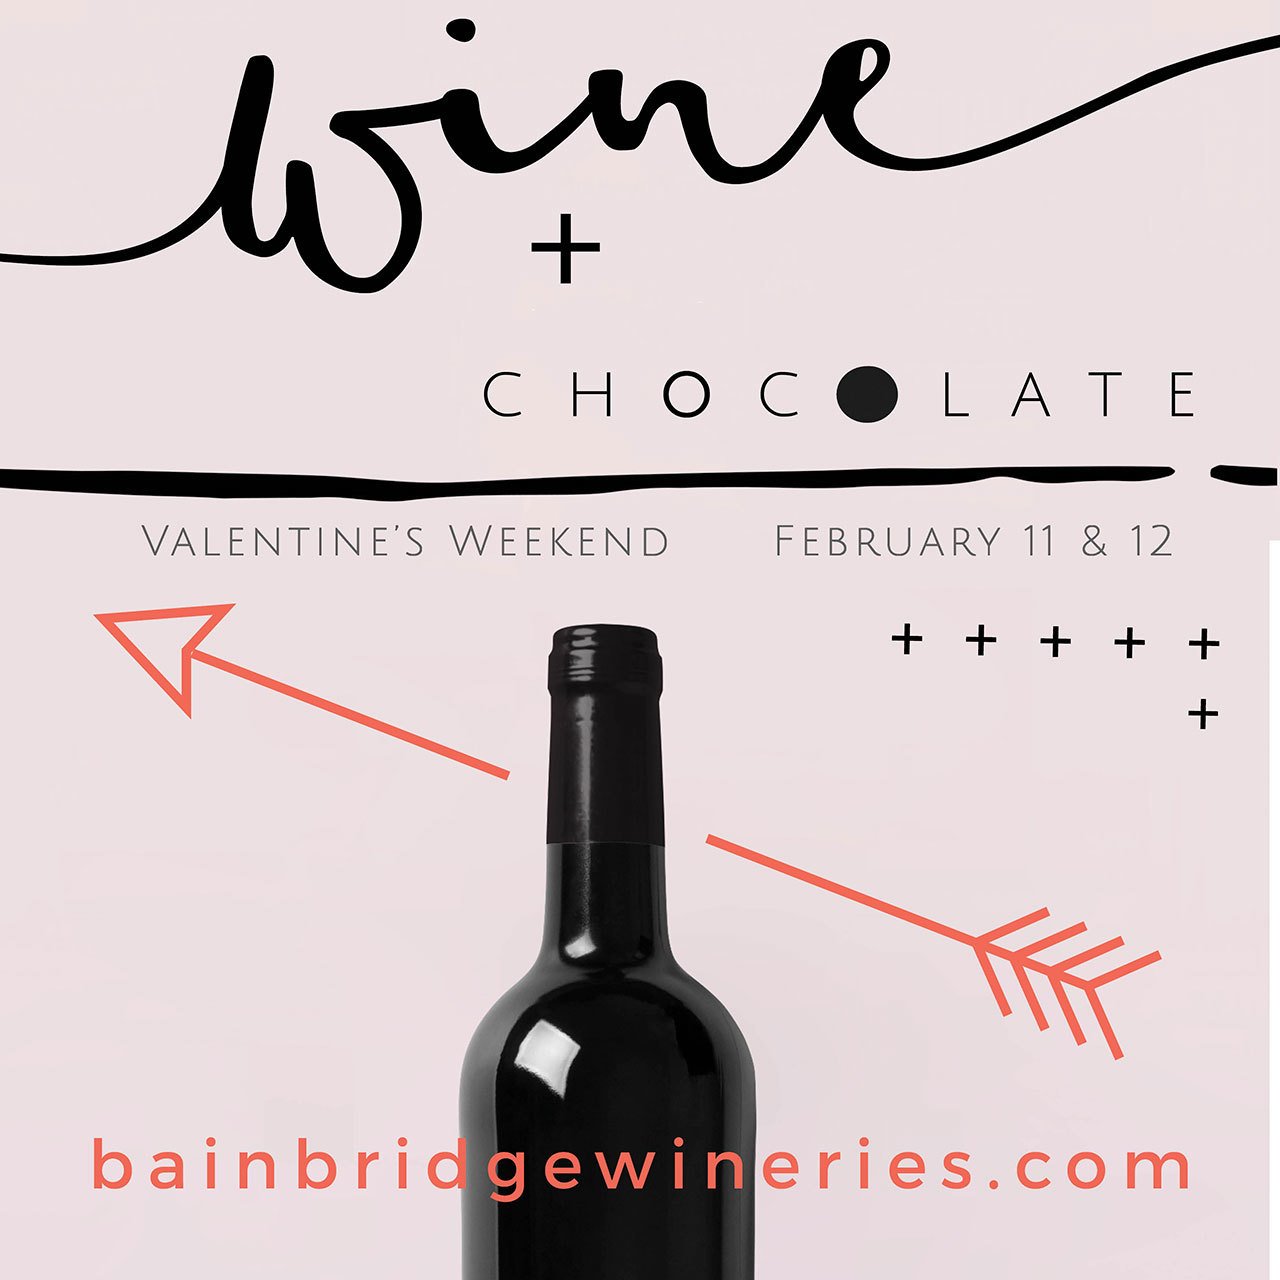 ‘Wine & Chocolate’ event on Bainbridge Island